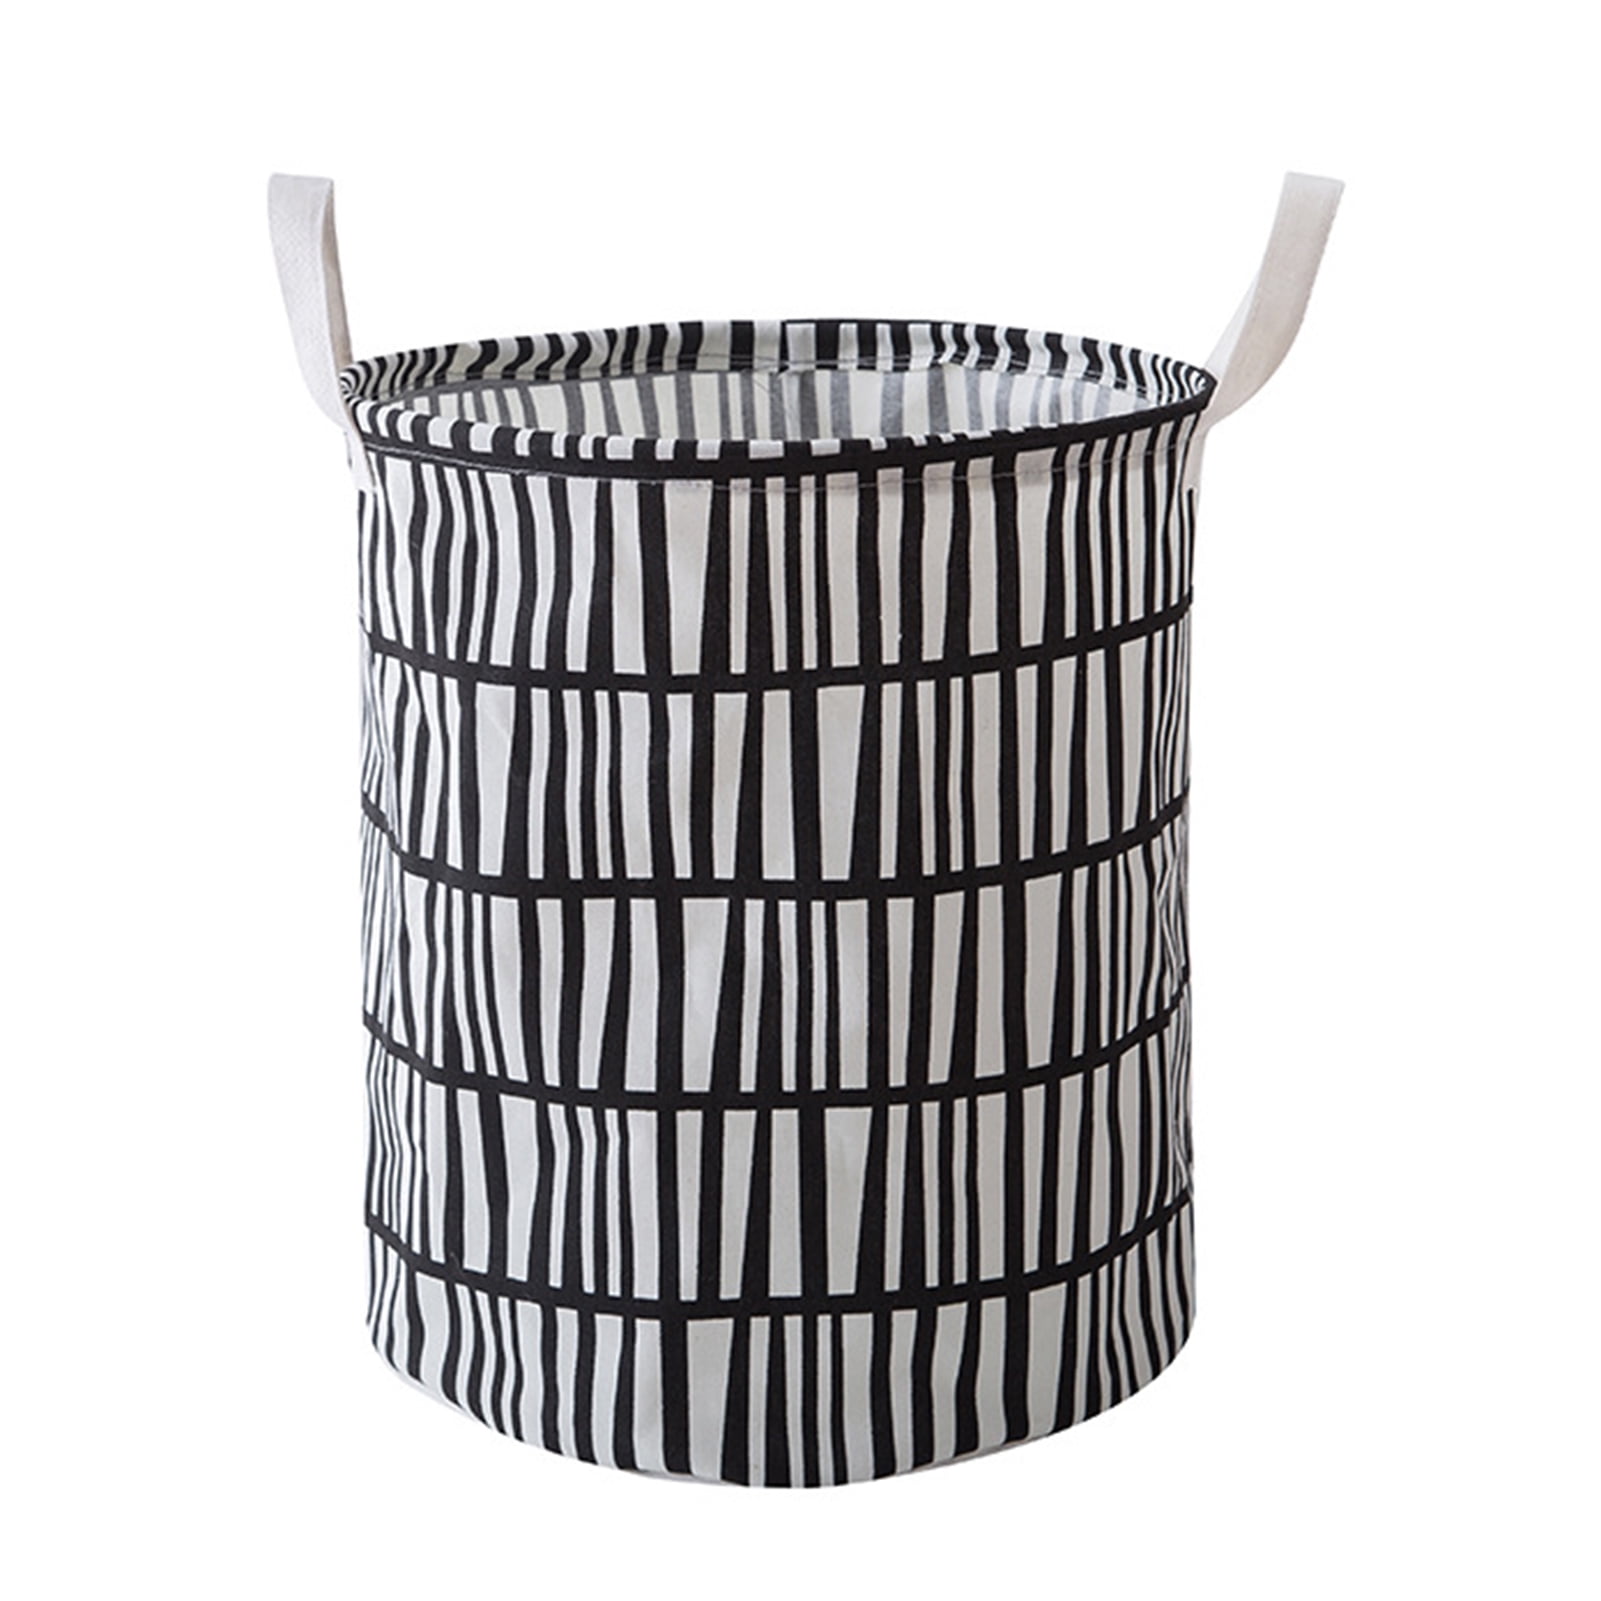 Laundry Basket Clothes Hamper Collapsible Folding Washing Holder Organizer Bag 